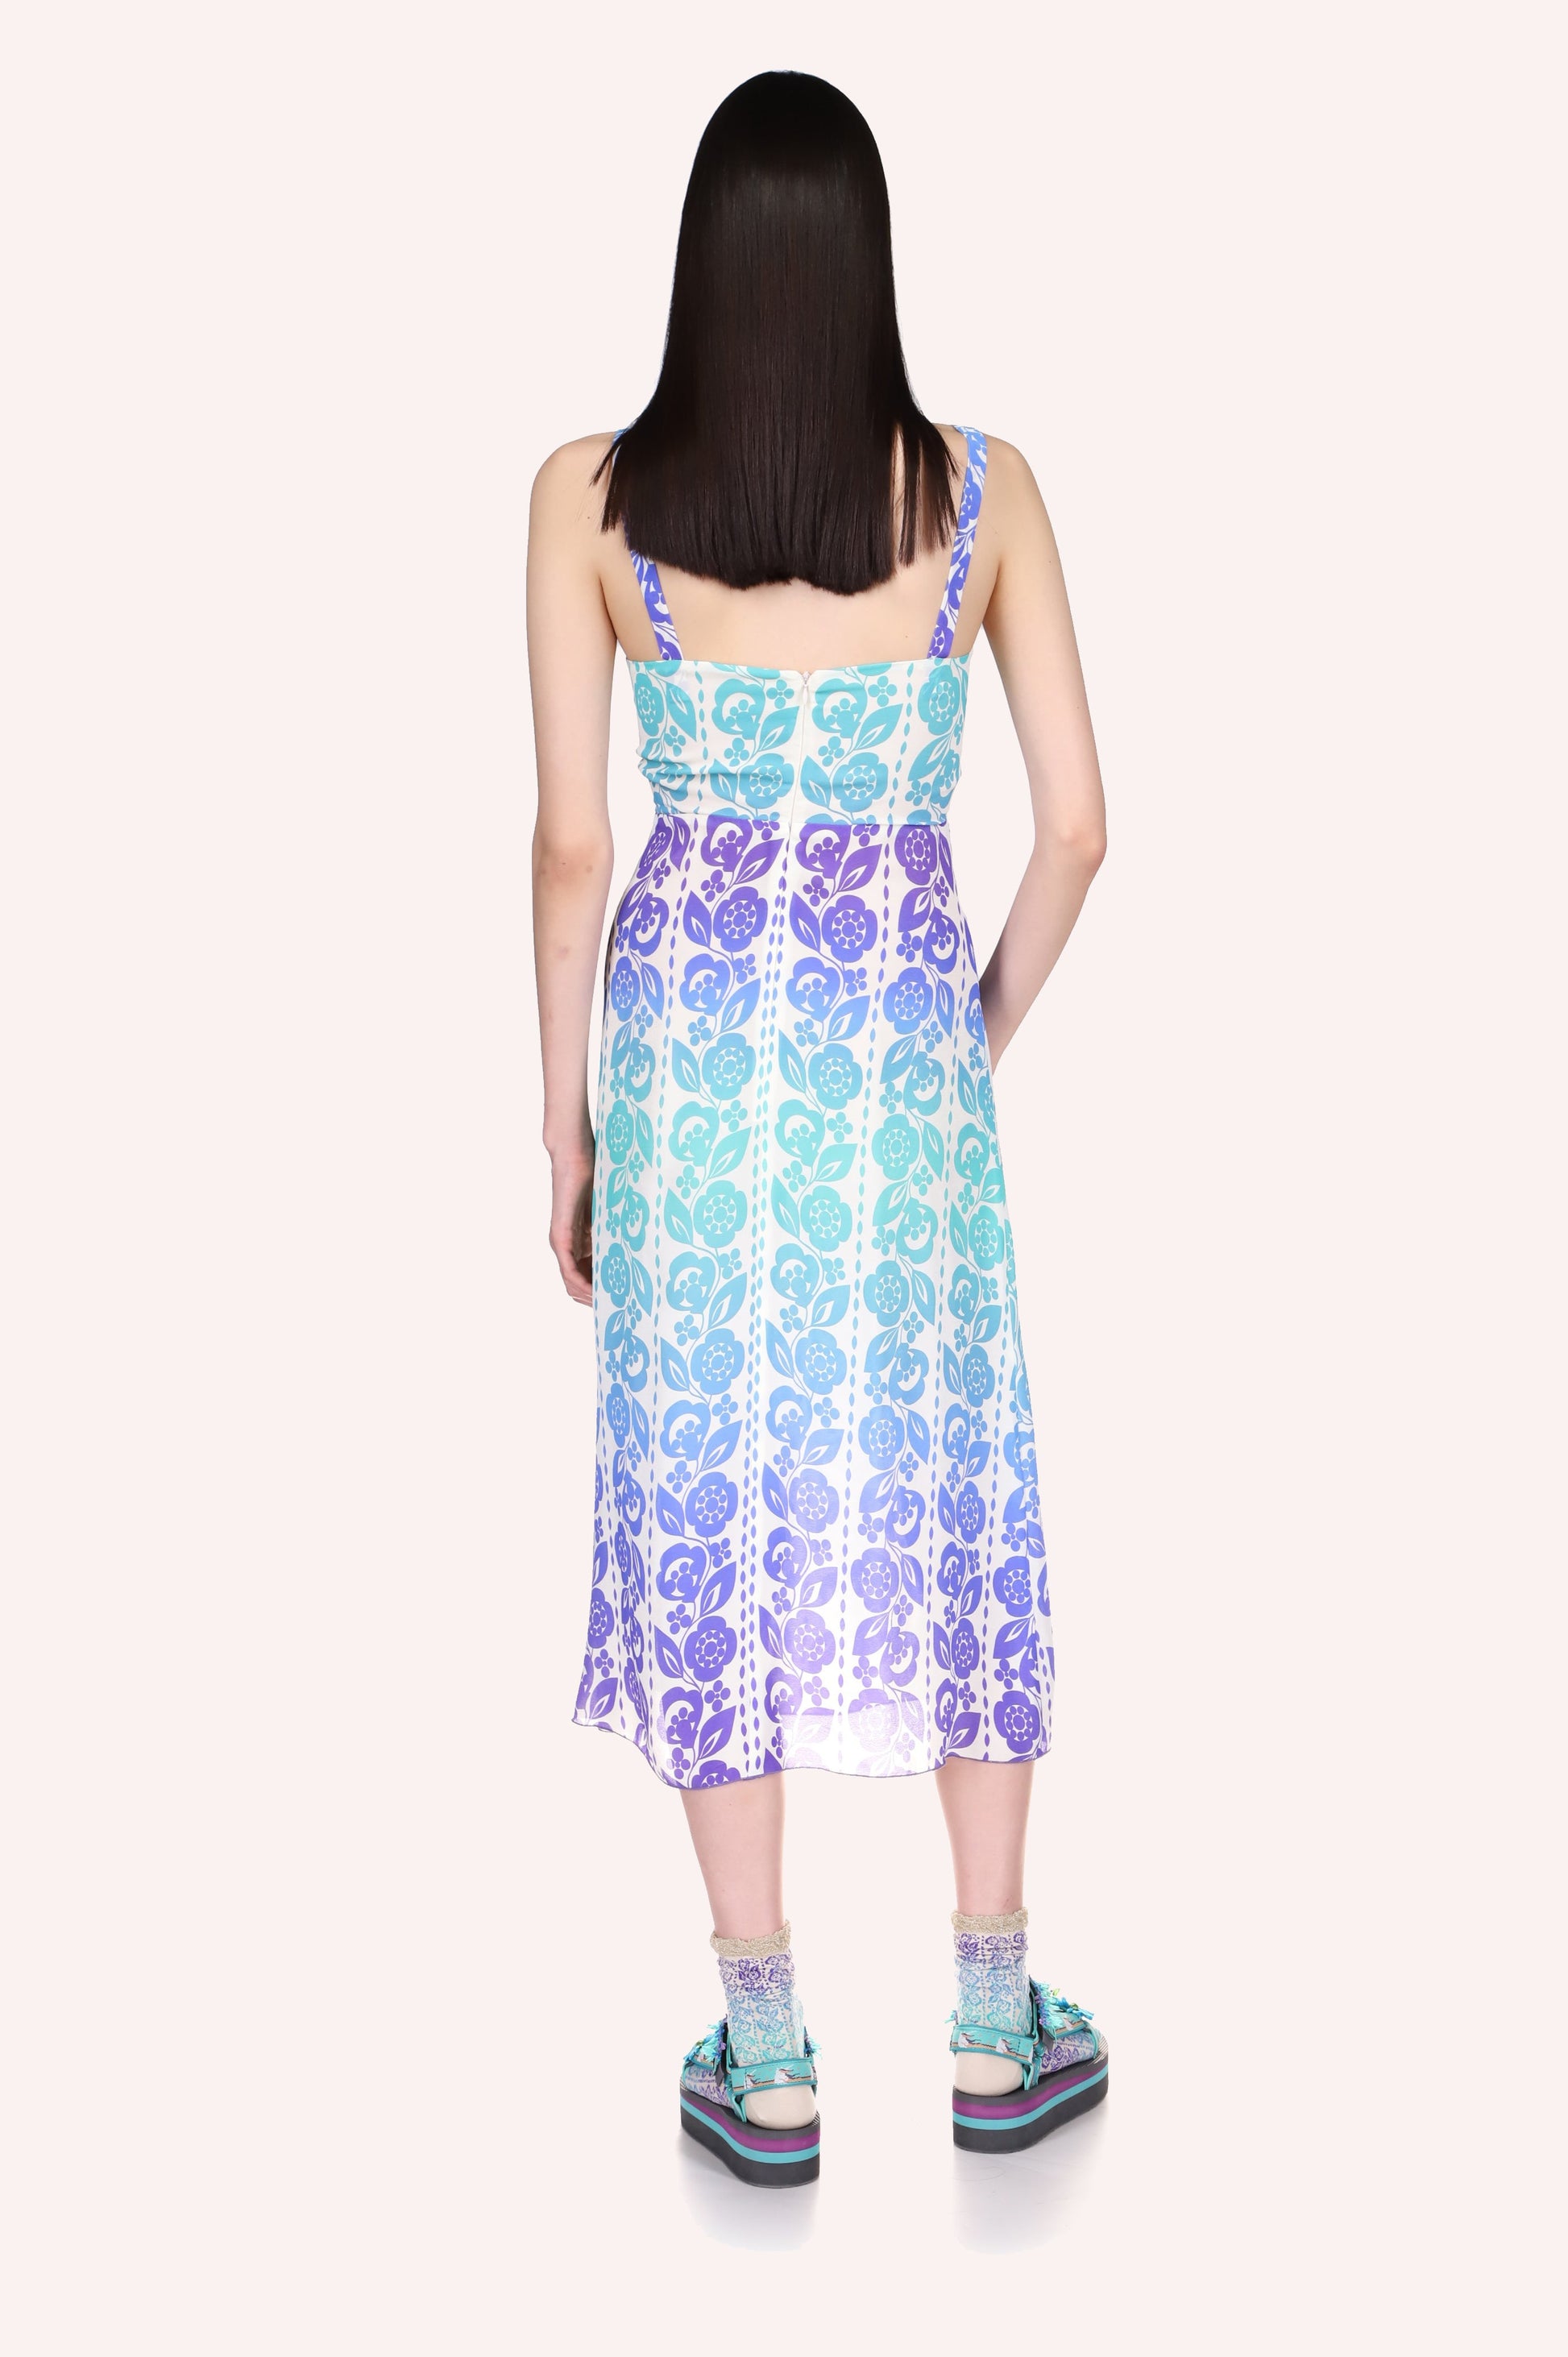 Radiant Ombre Slip Dress mid-calf long, sleeveless, bluish floral design